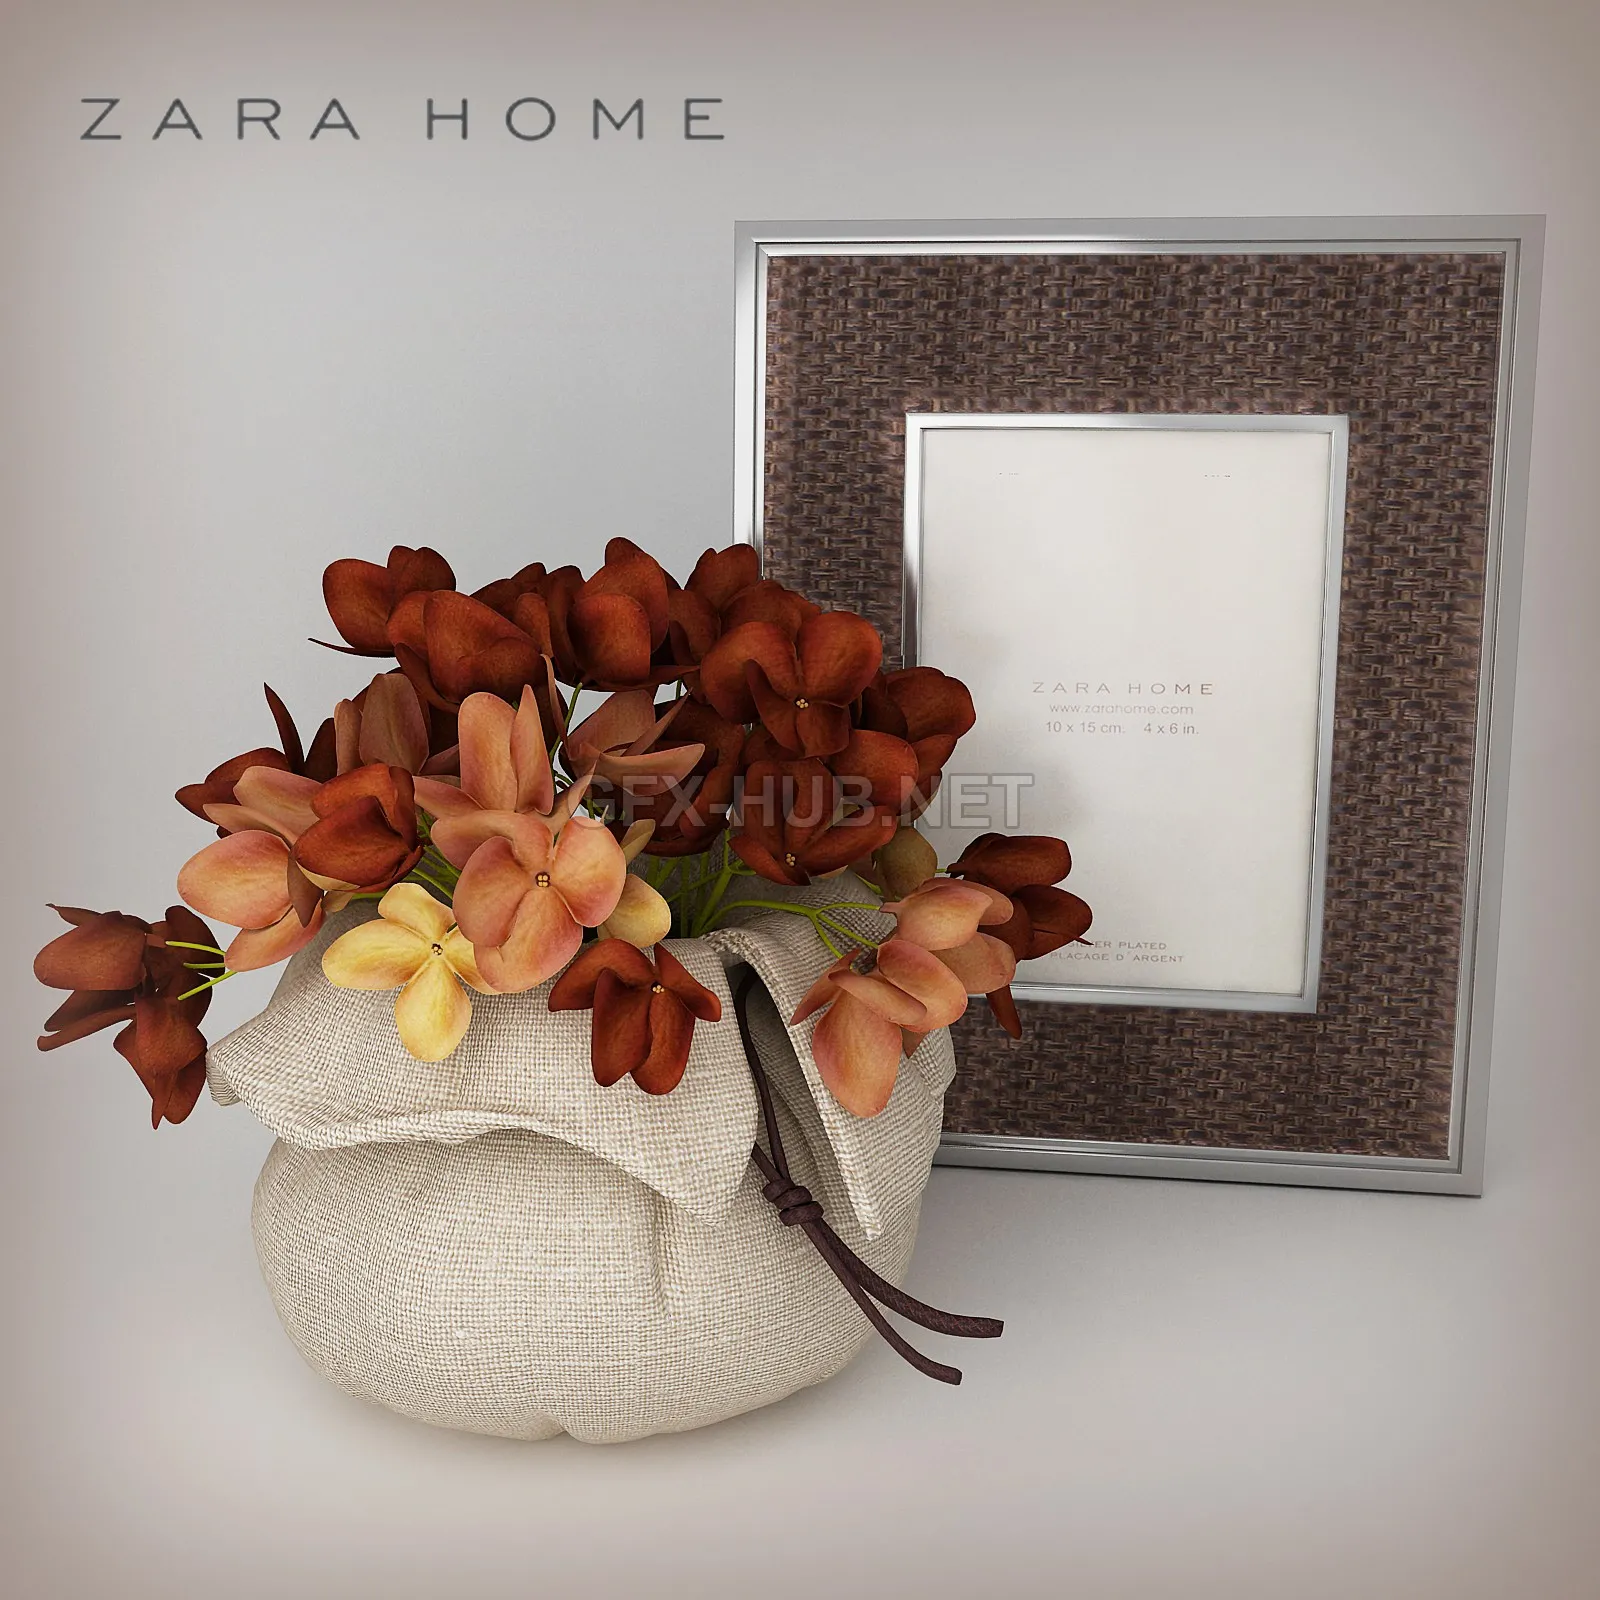 PRO MODELS – Accessories Zara aroma bag & frame